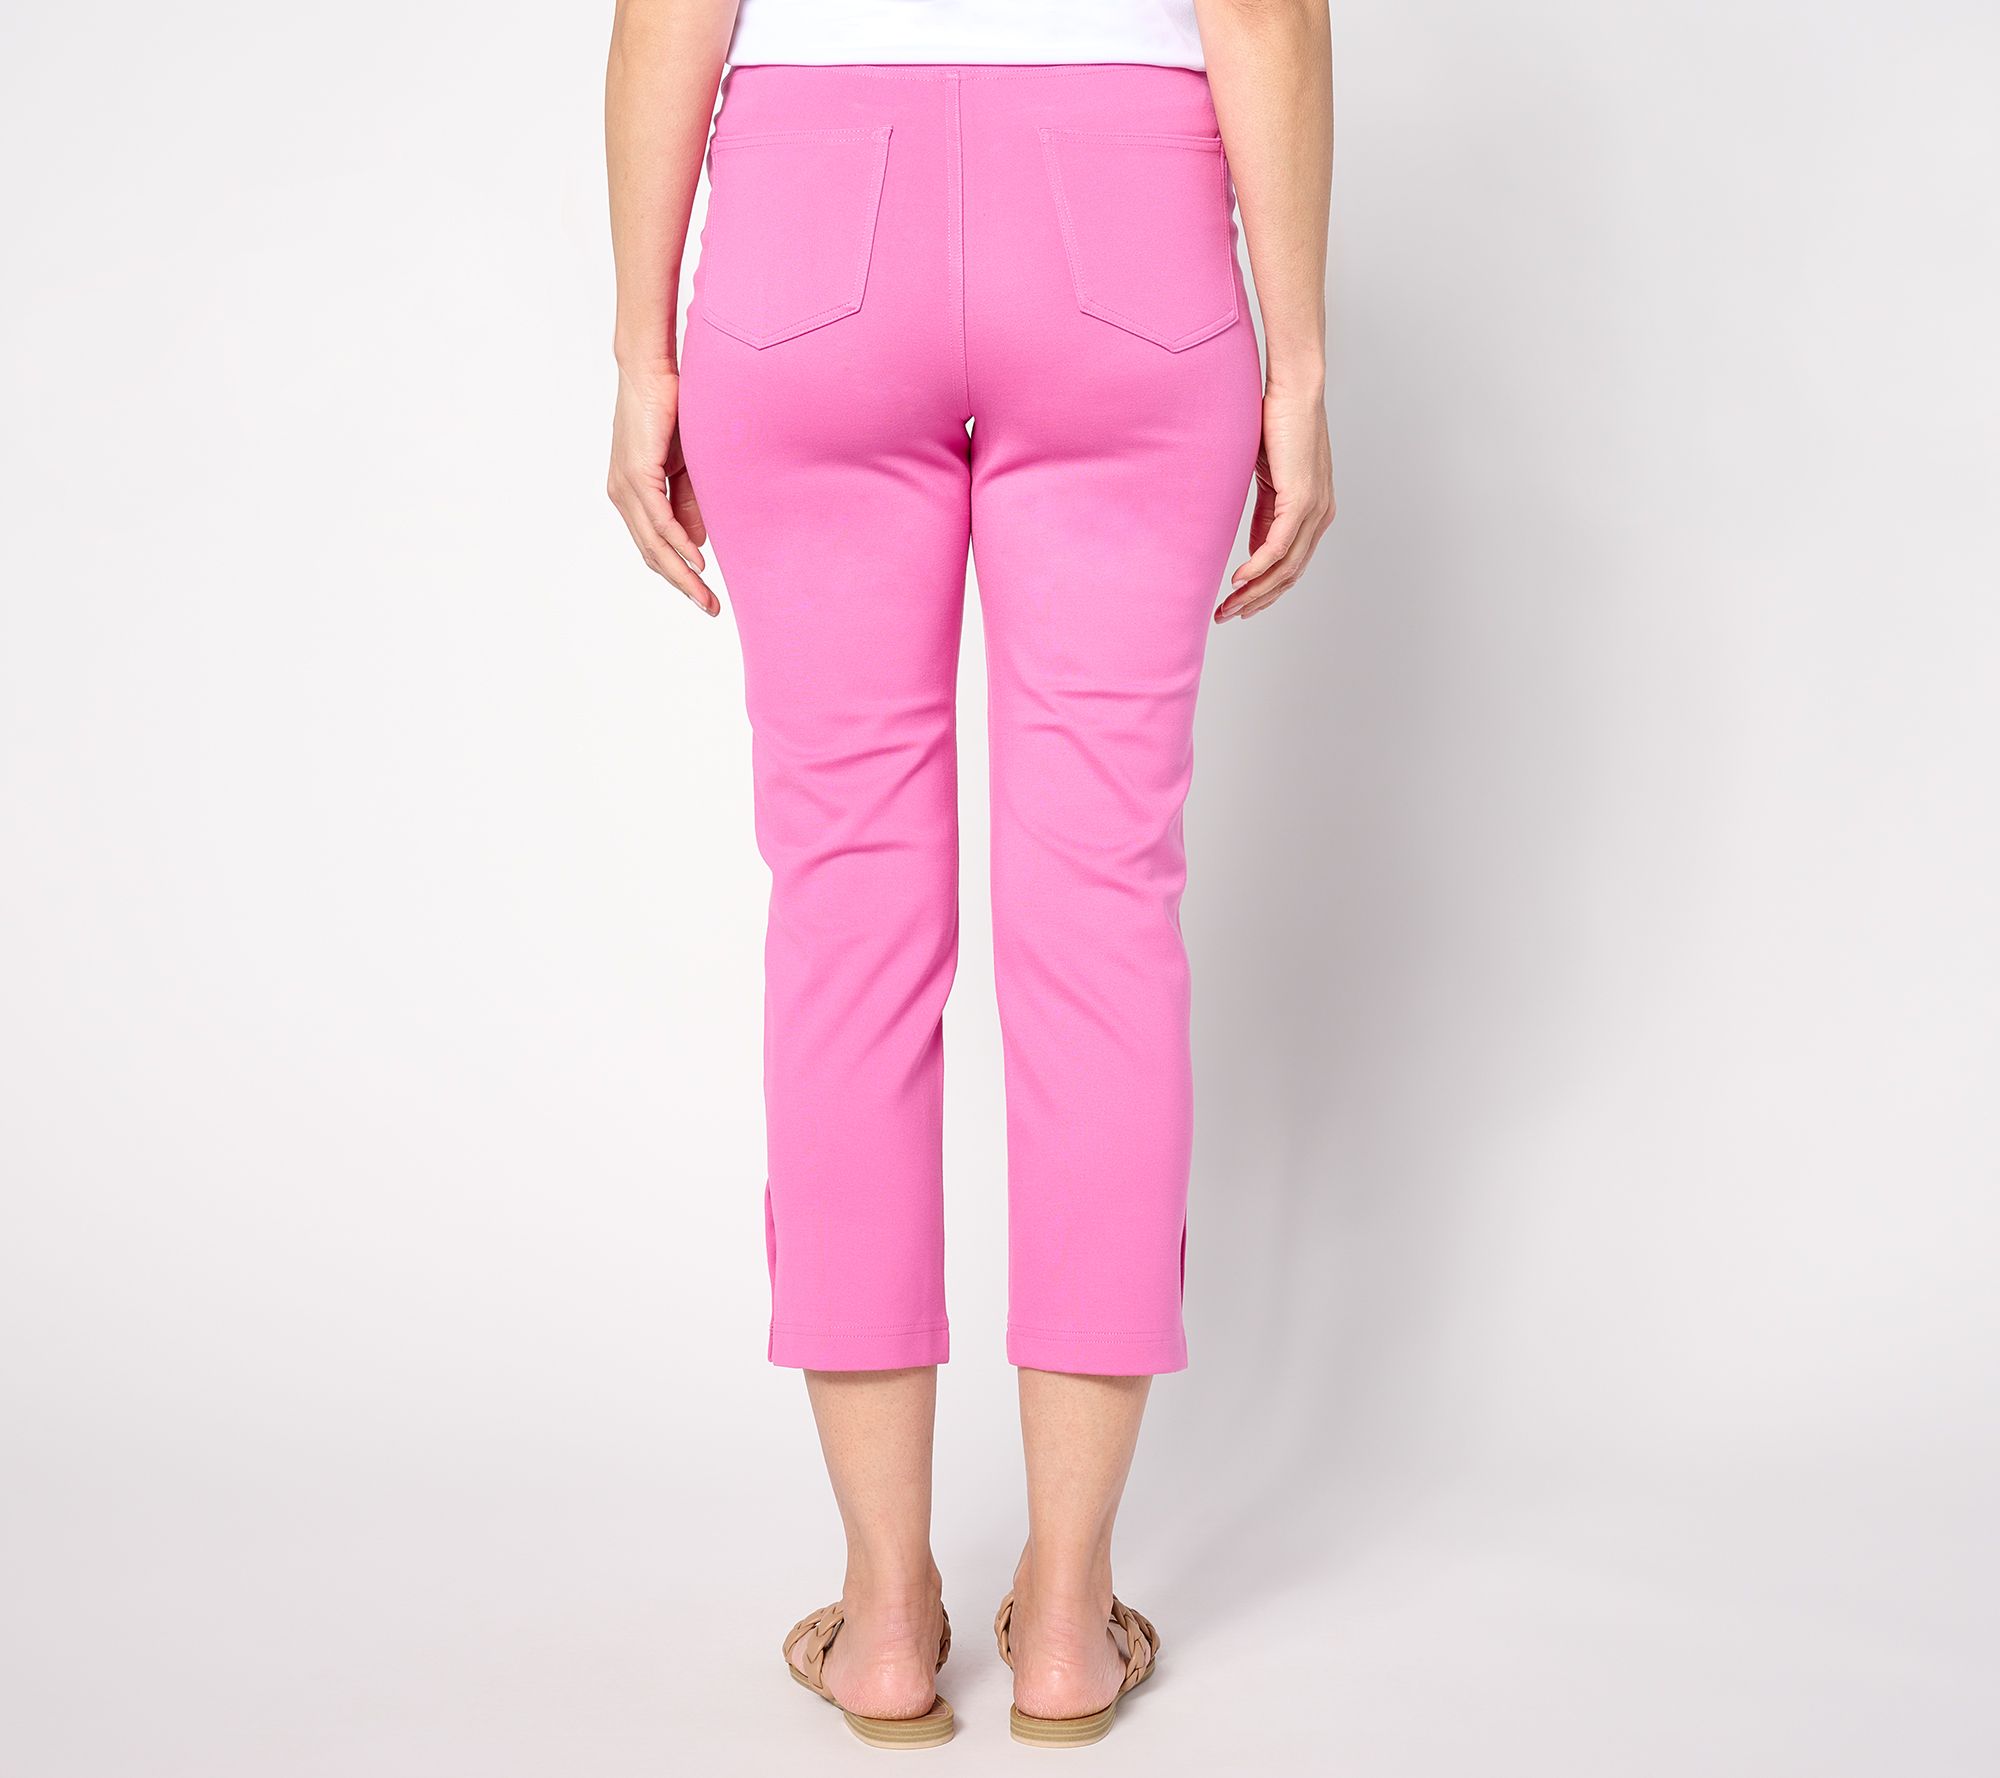 Lands' End Women's Petite Active Crop Yoga Pants - Small - Hot Pink : Target